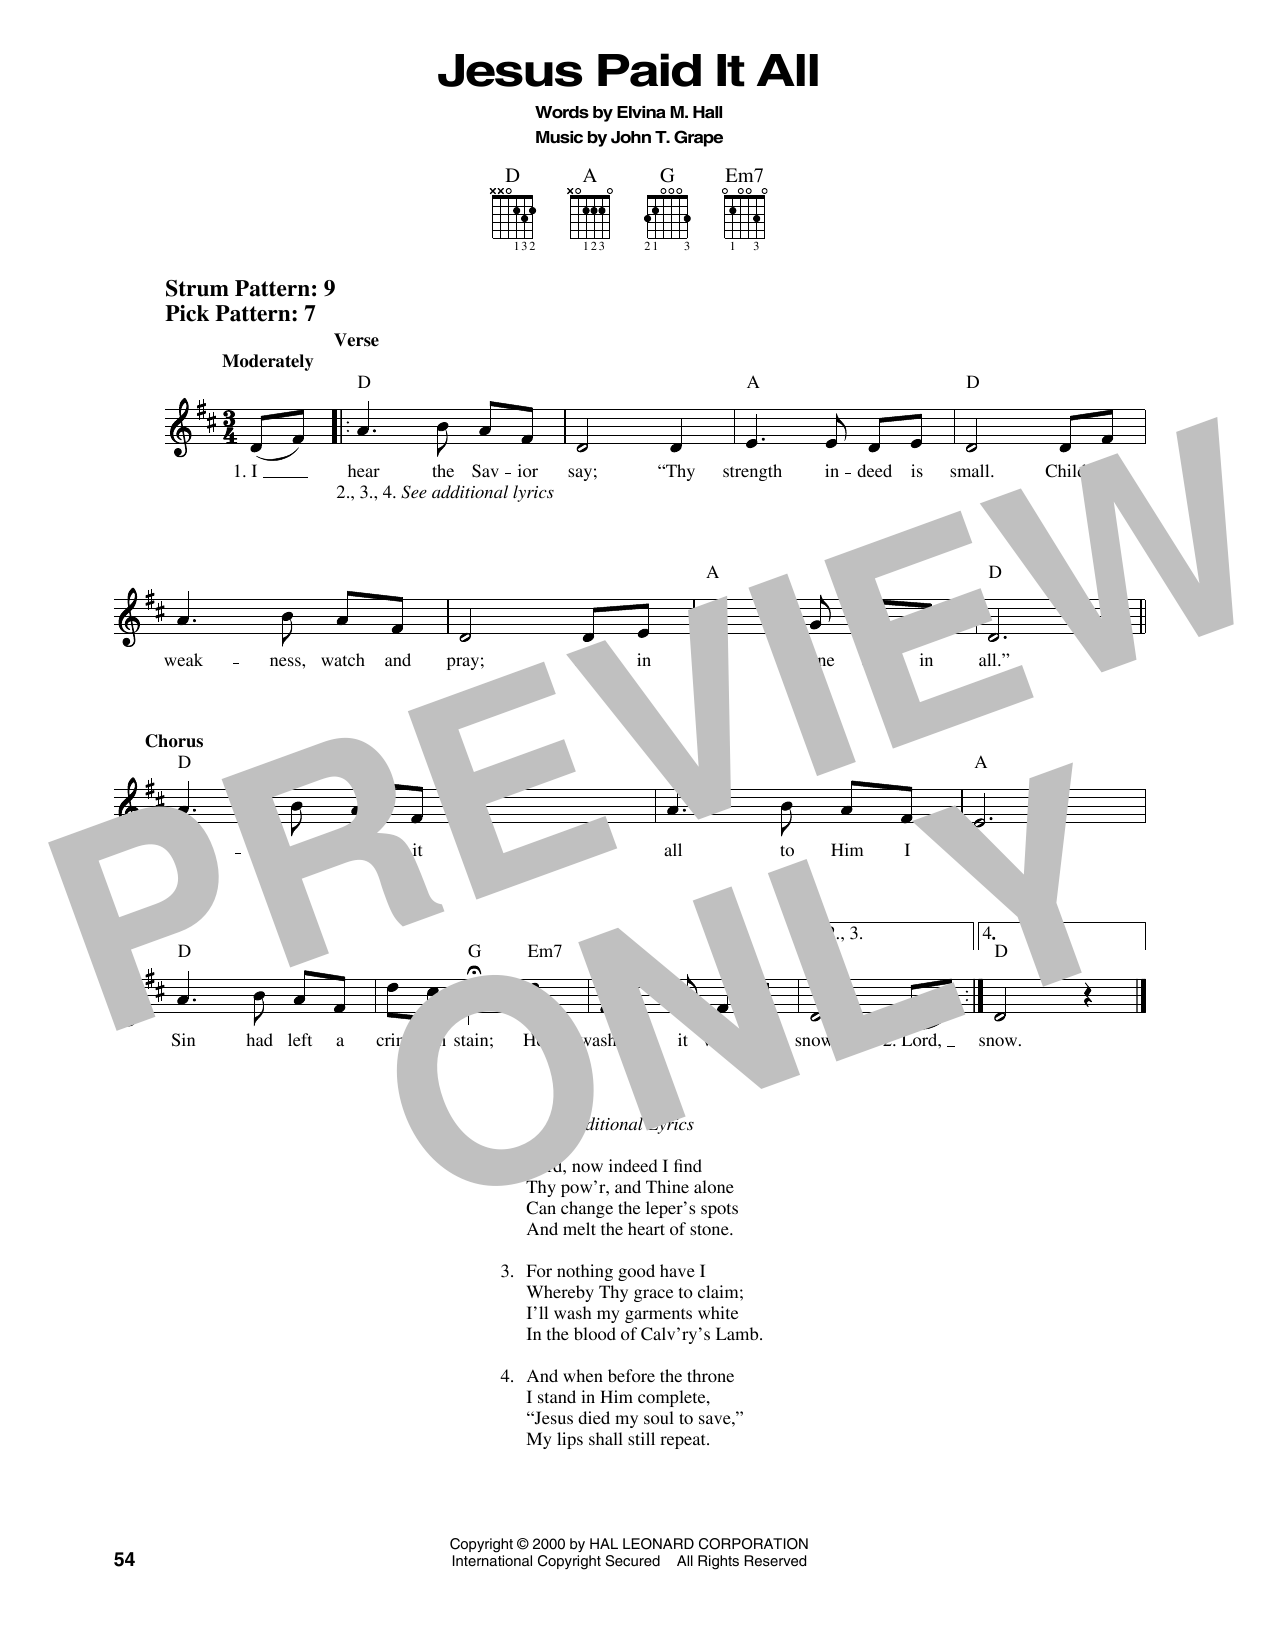 Elvina M. Hall Jesus Paid It All sheet music notes printable PDF score